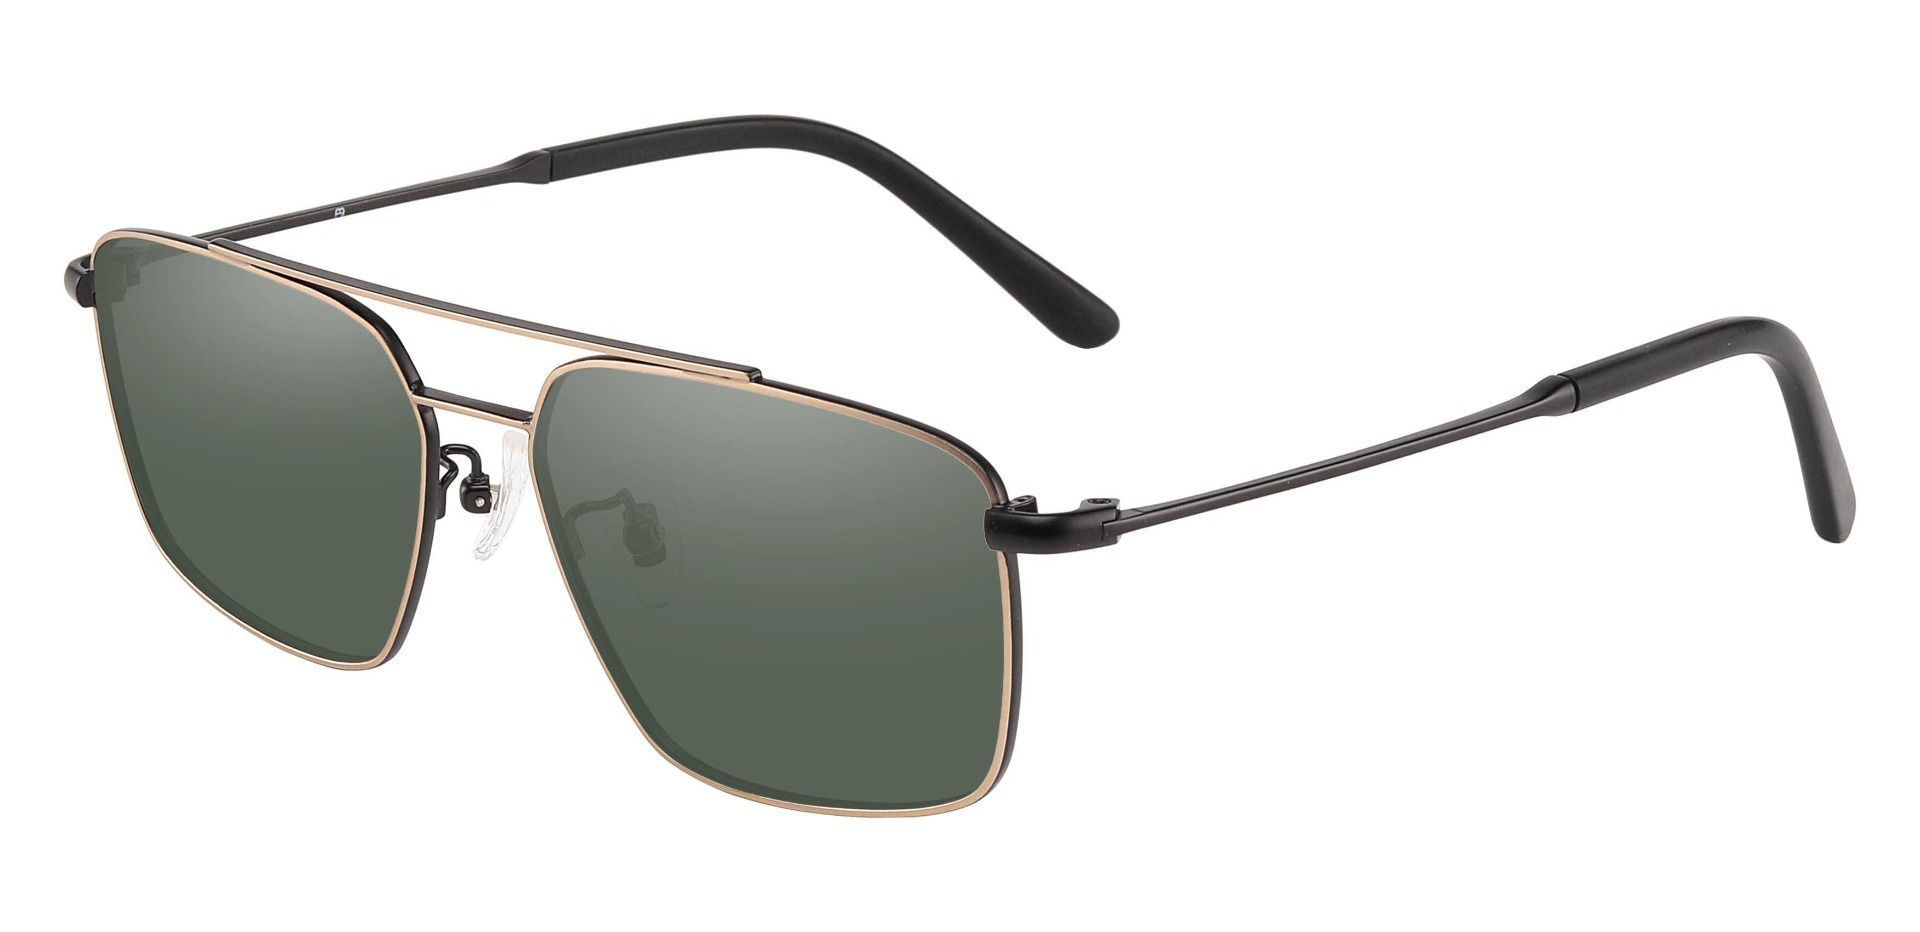 Barlow Aviator Progressive Sunglasses - Gold Frame With Green Lenses